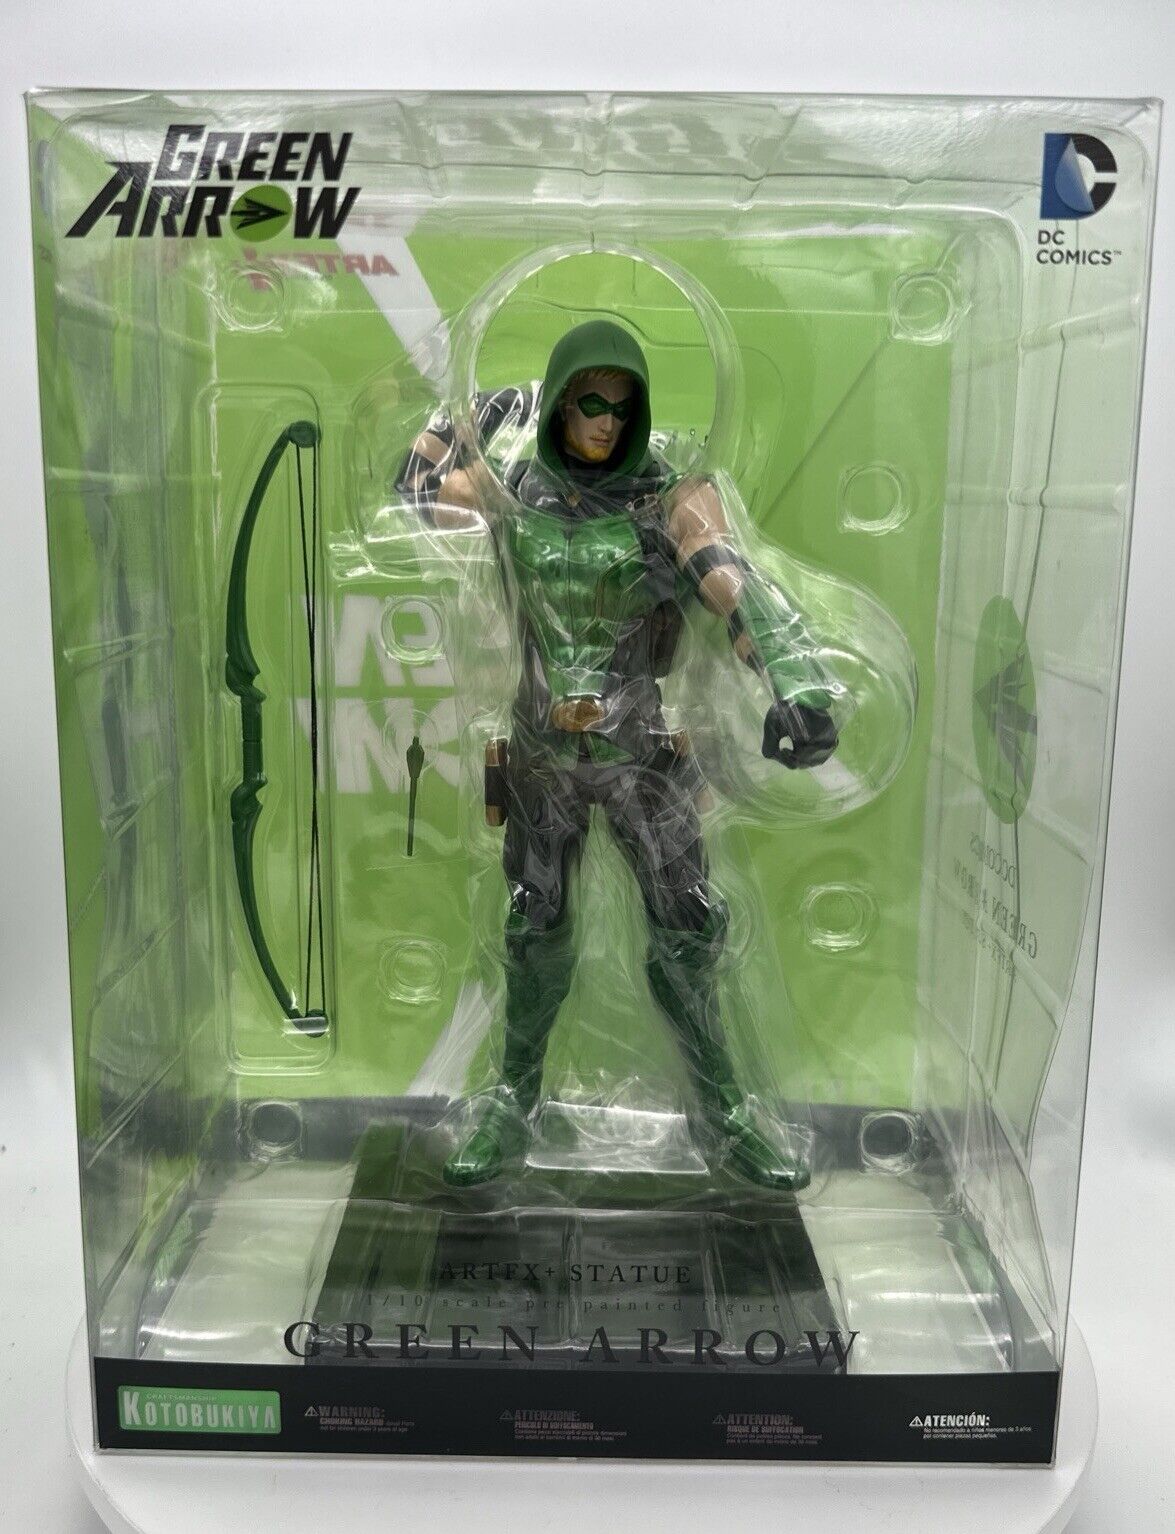 Kotobukiya DC Comics Green Arrow Artfx+ Statue With Stand - Mint Condition